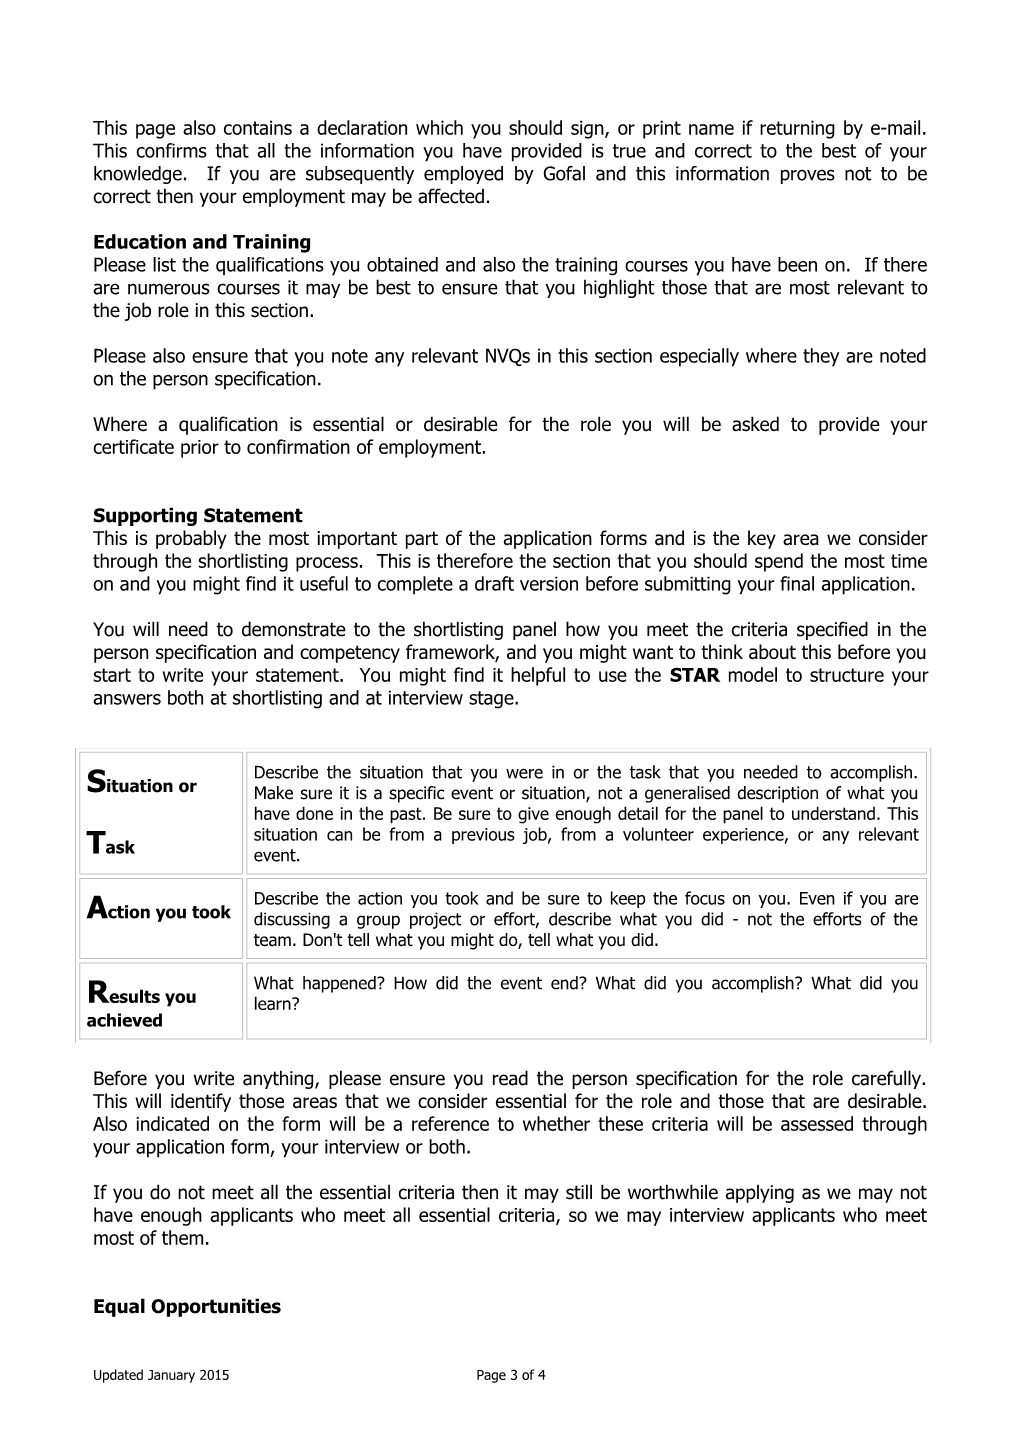 Gofal Recruitment Process Key Points